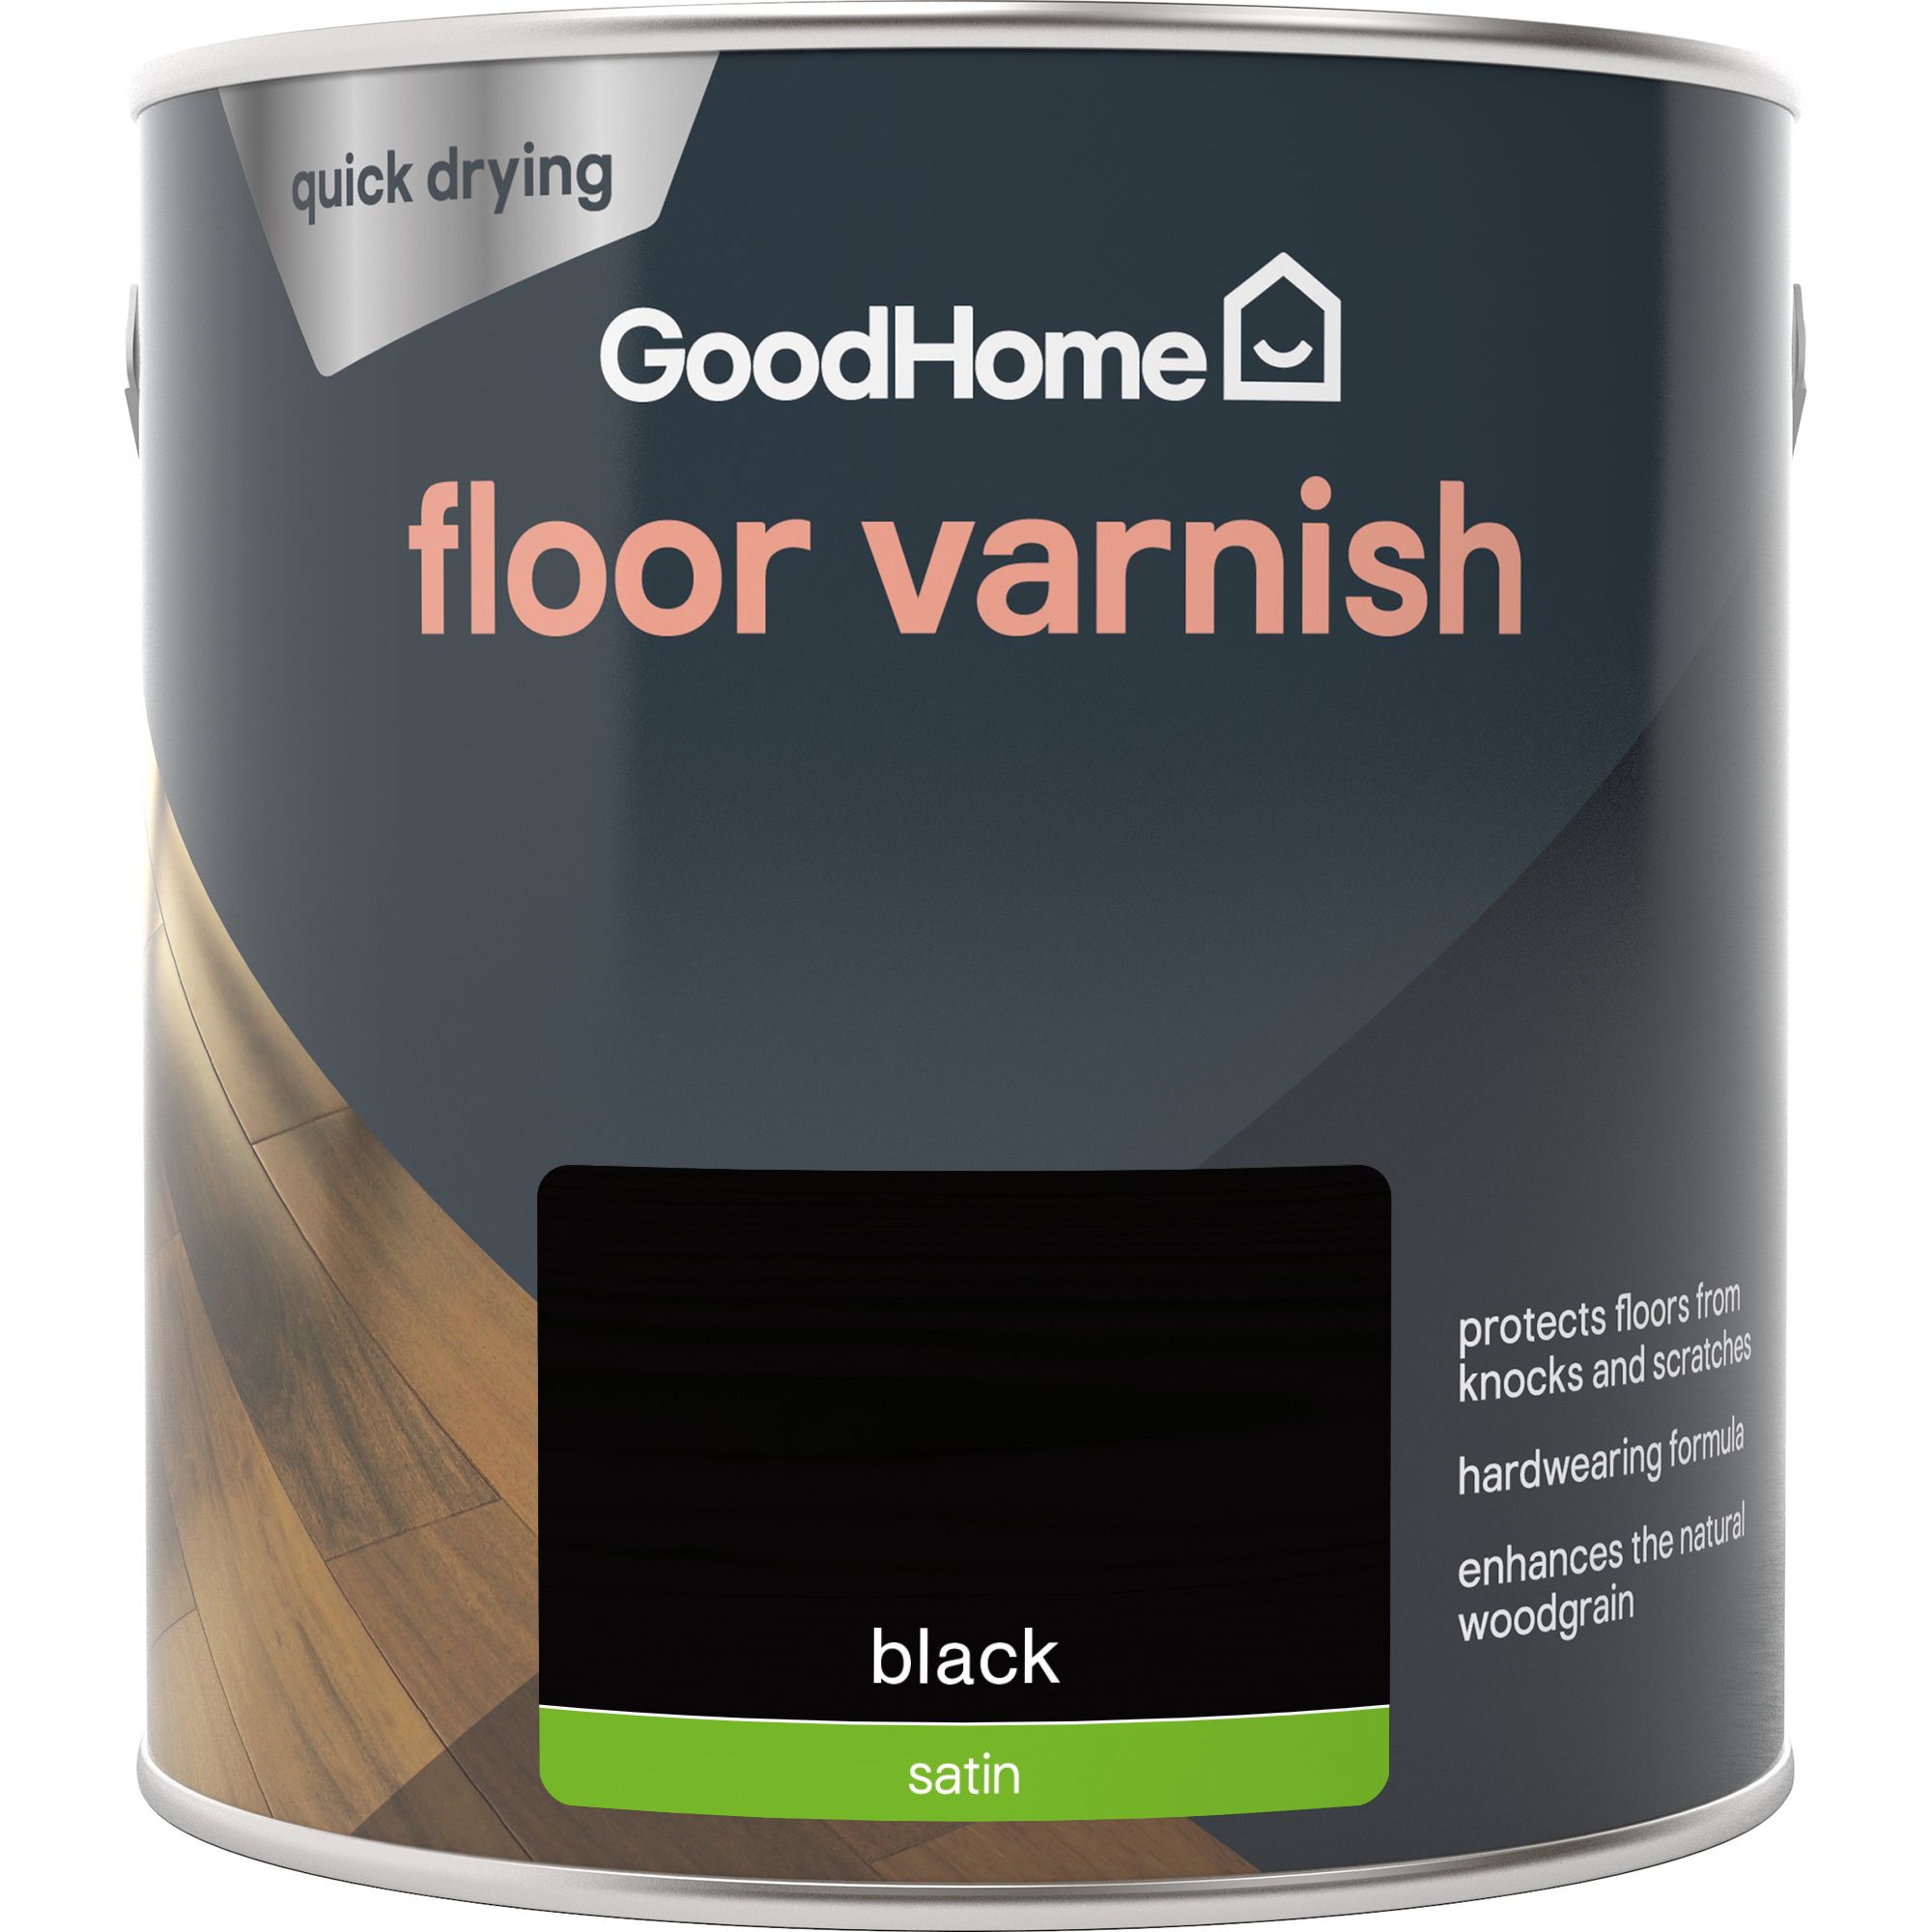 GoodHome Black Satin Floor Wood varnish, 2.5L